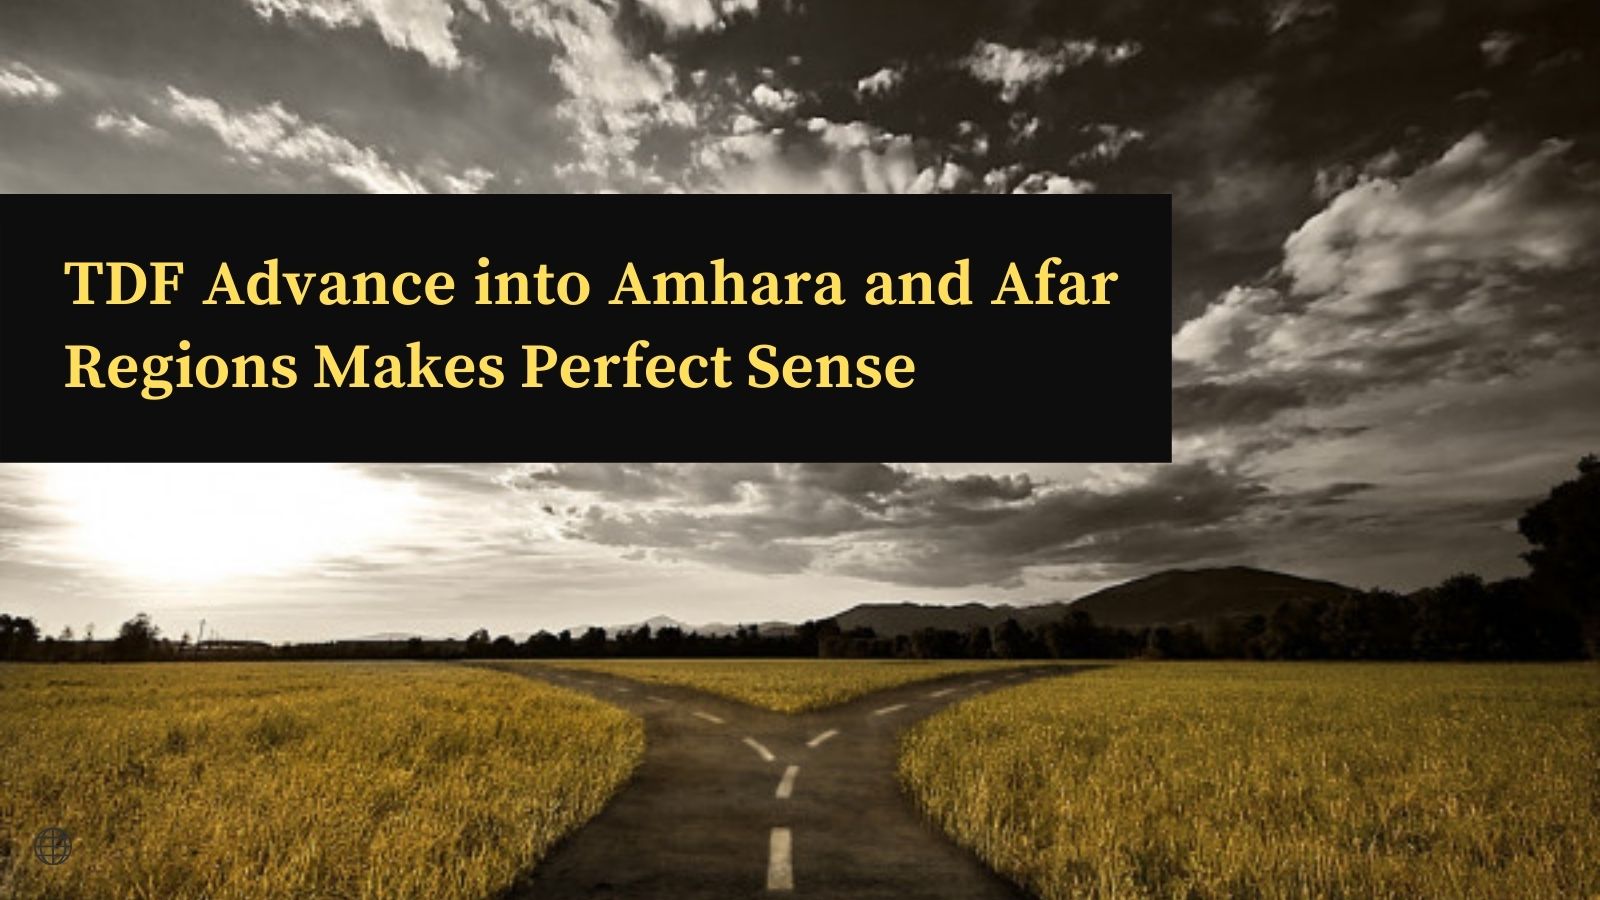 TDF Advance into Amhara and Afar Regions Makes Perfect Sense